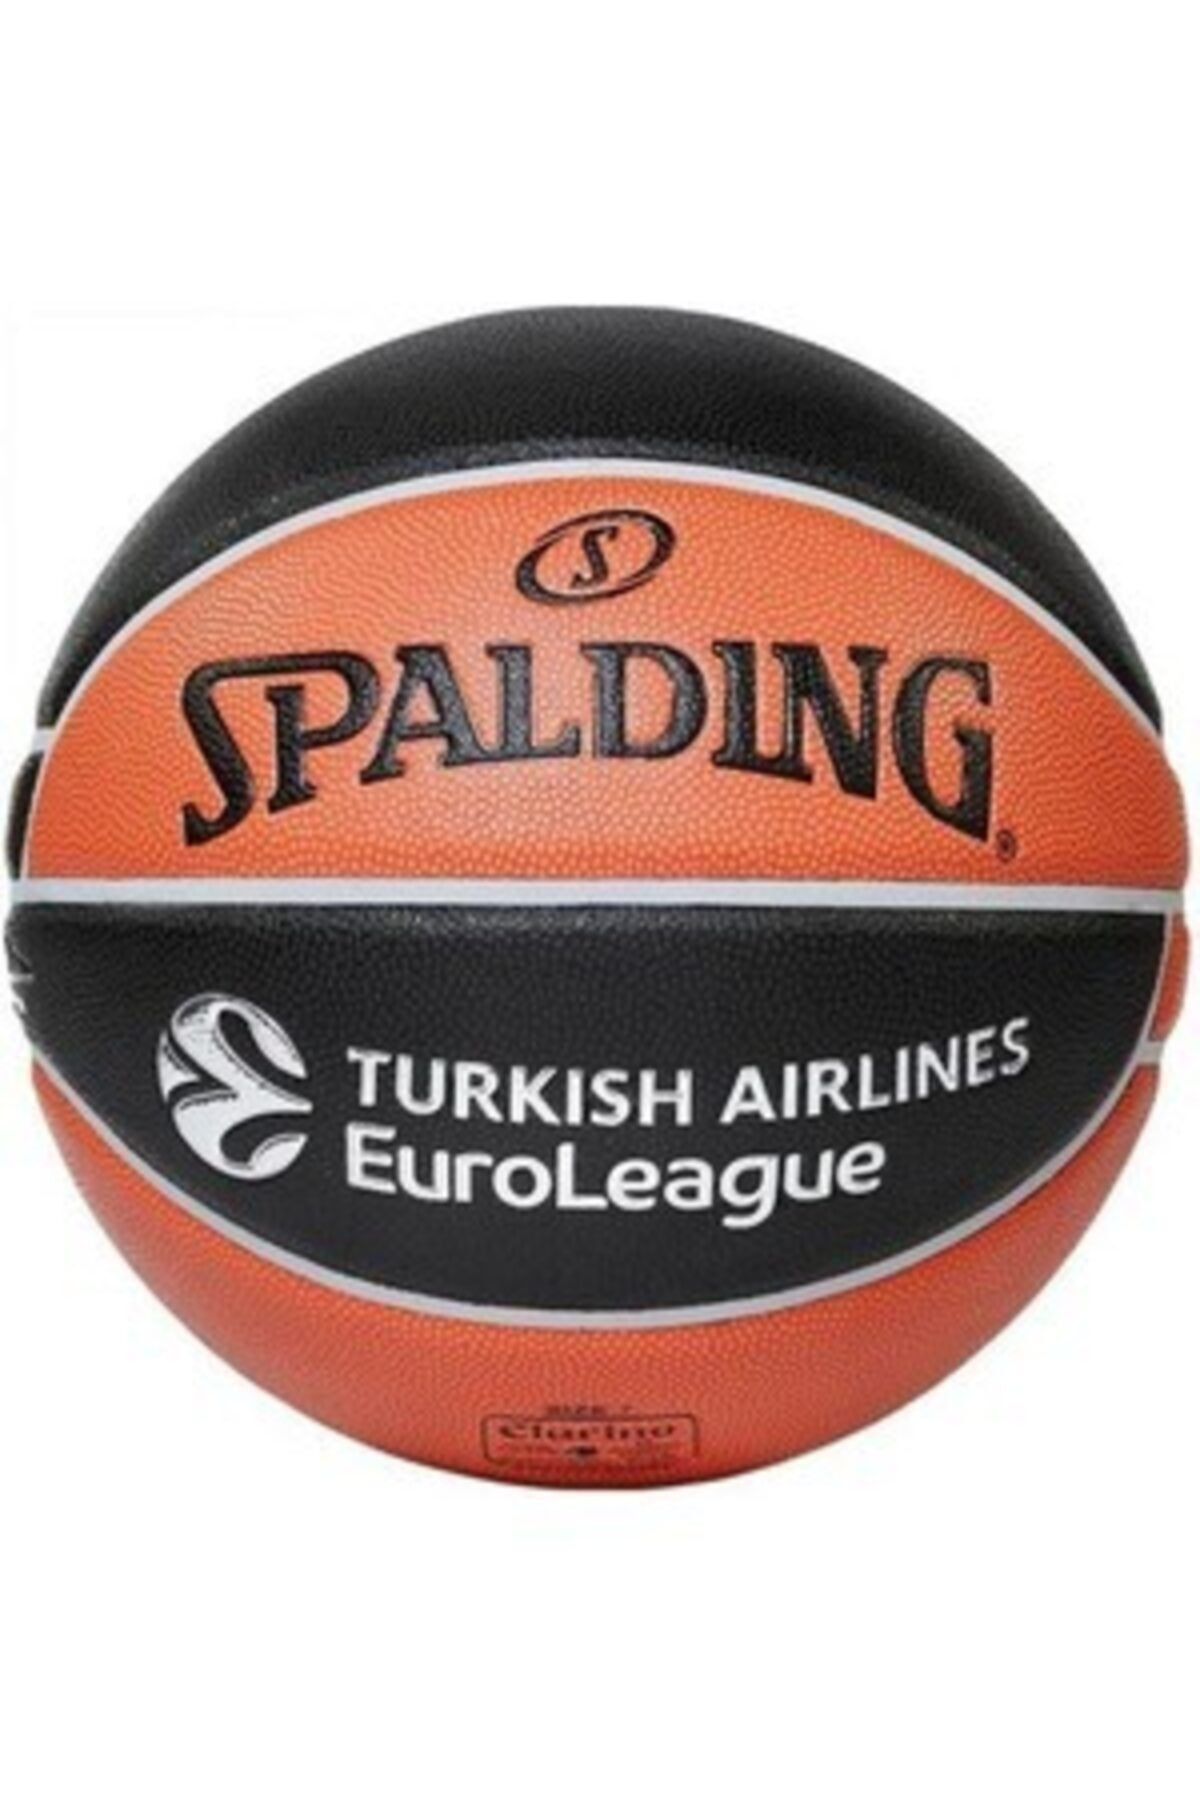 Spalding Basketbol Topu Tf-1000 Euroleague